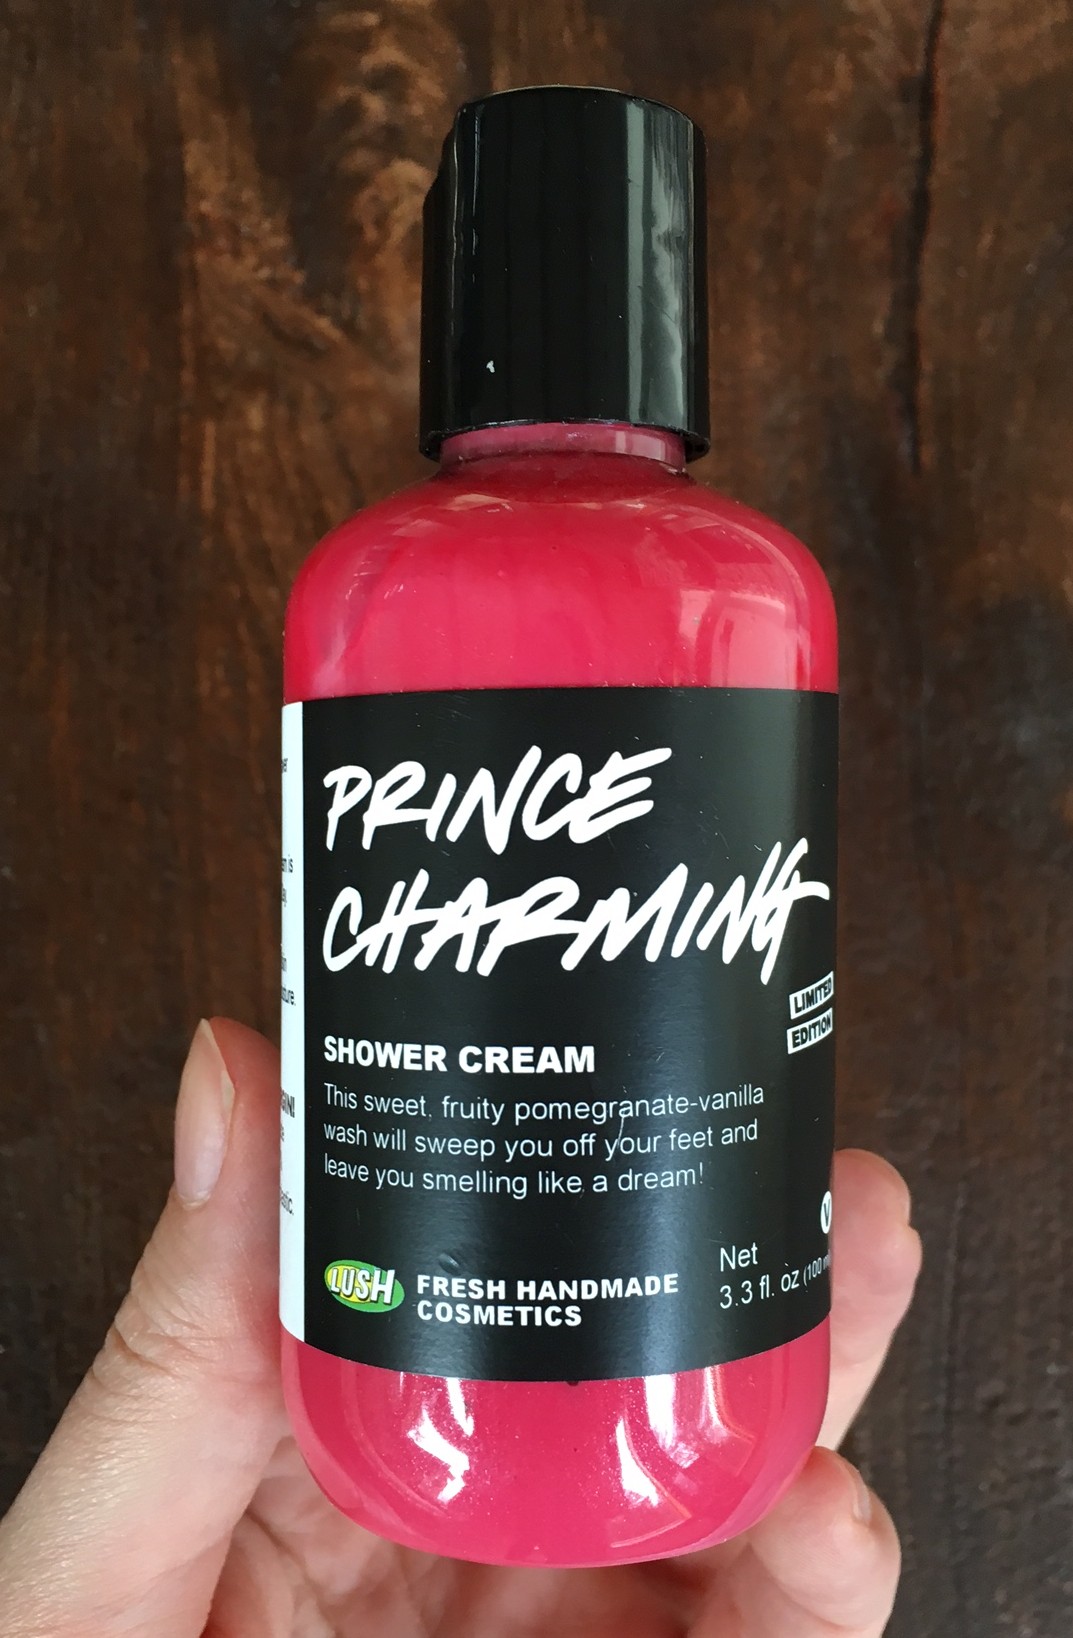 Lush Prince Charming Shower Cream